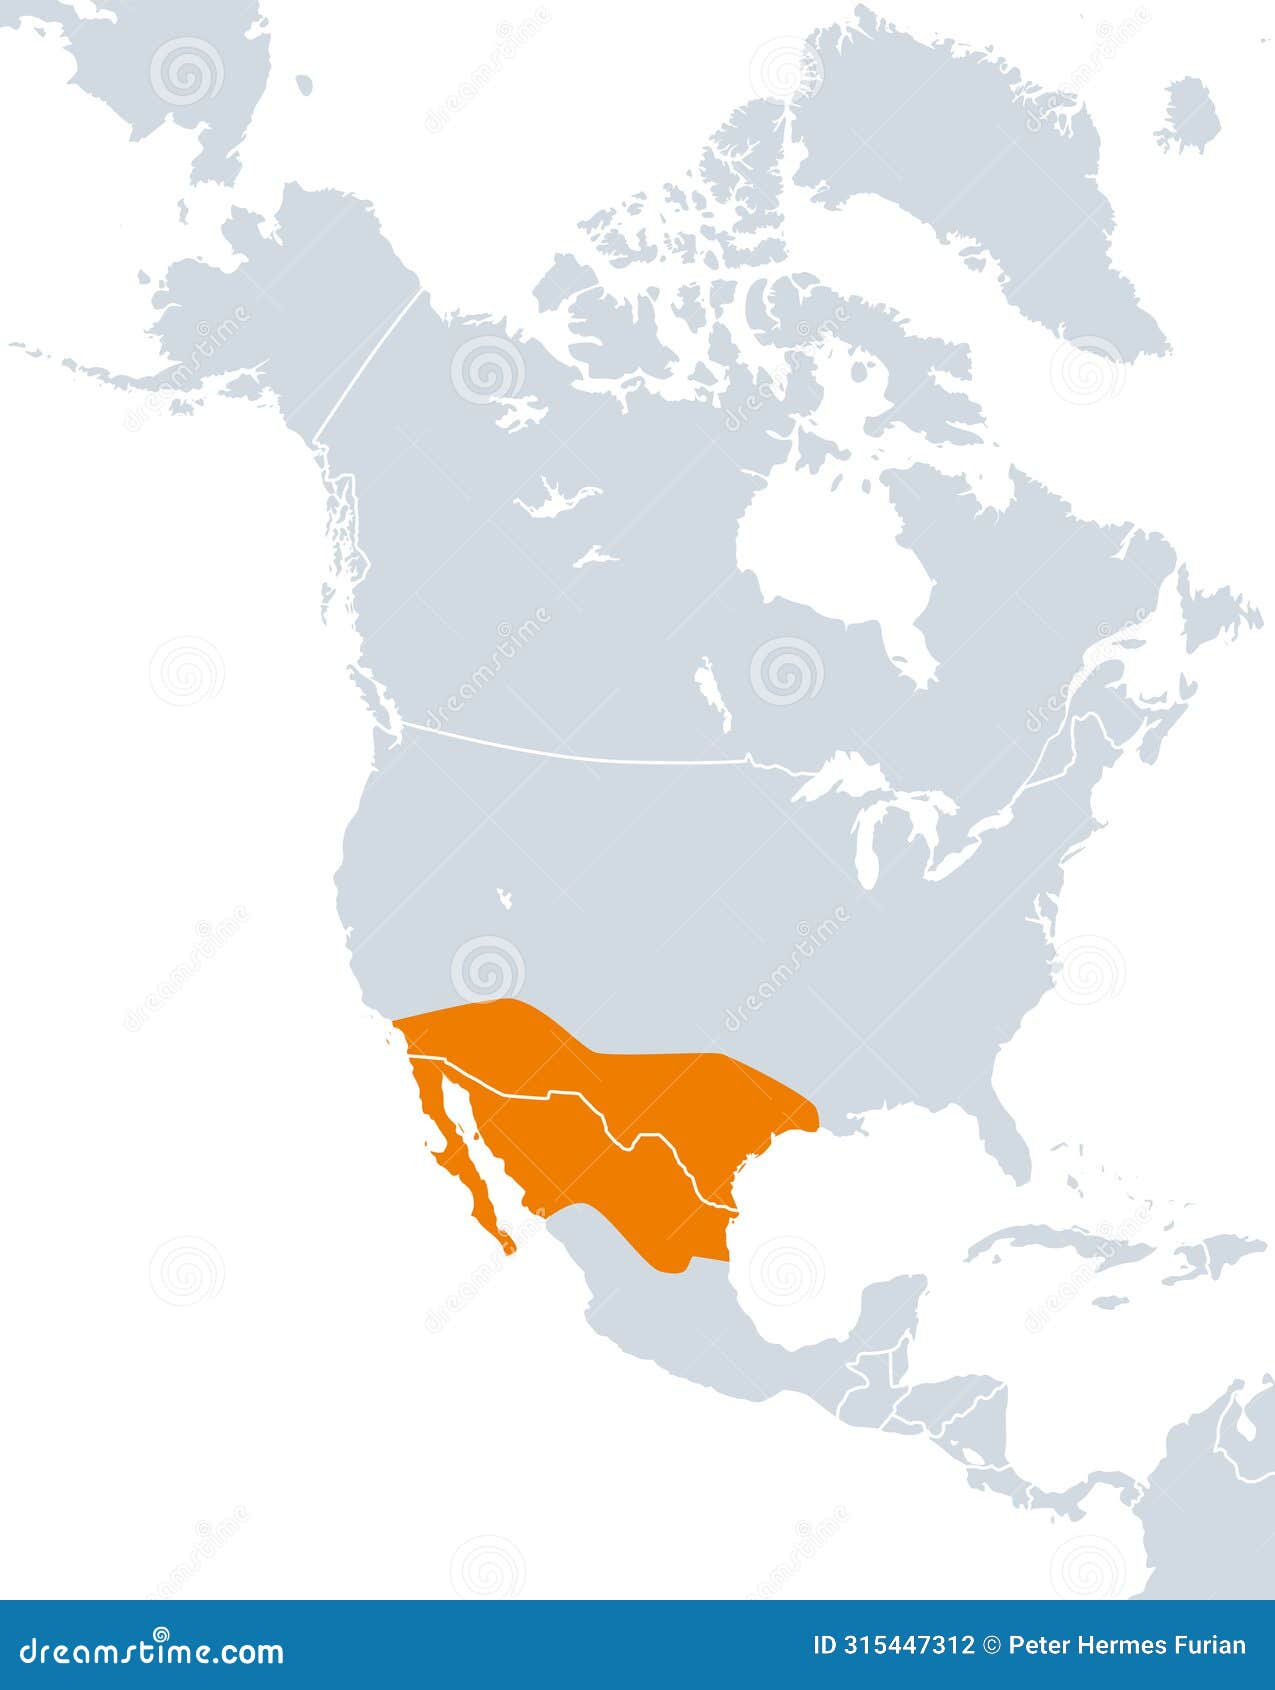 aridoamerica map, ecoregion of dry and arid climate in north america